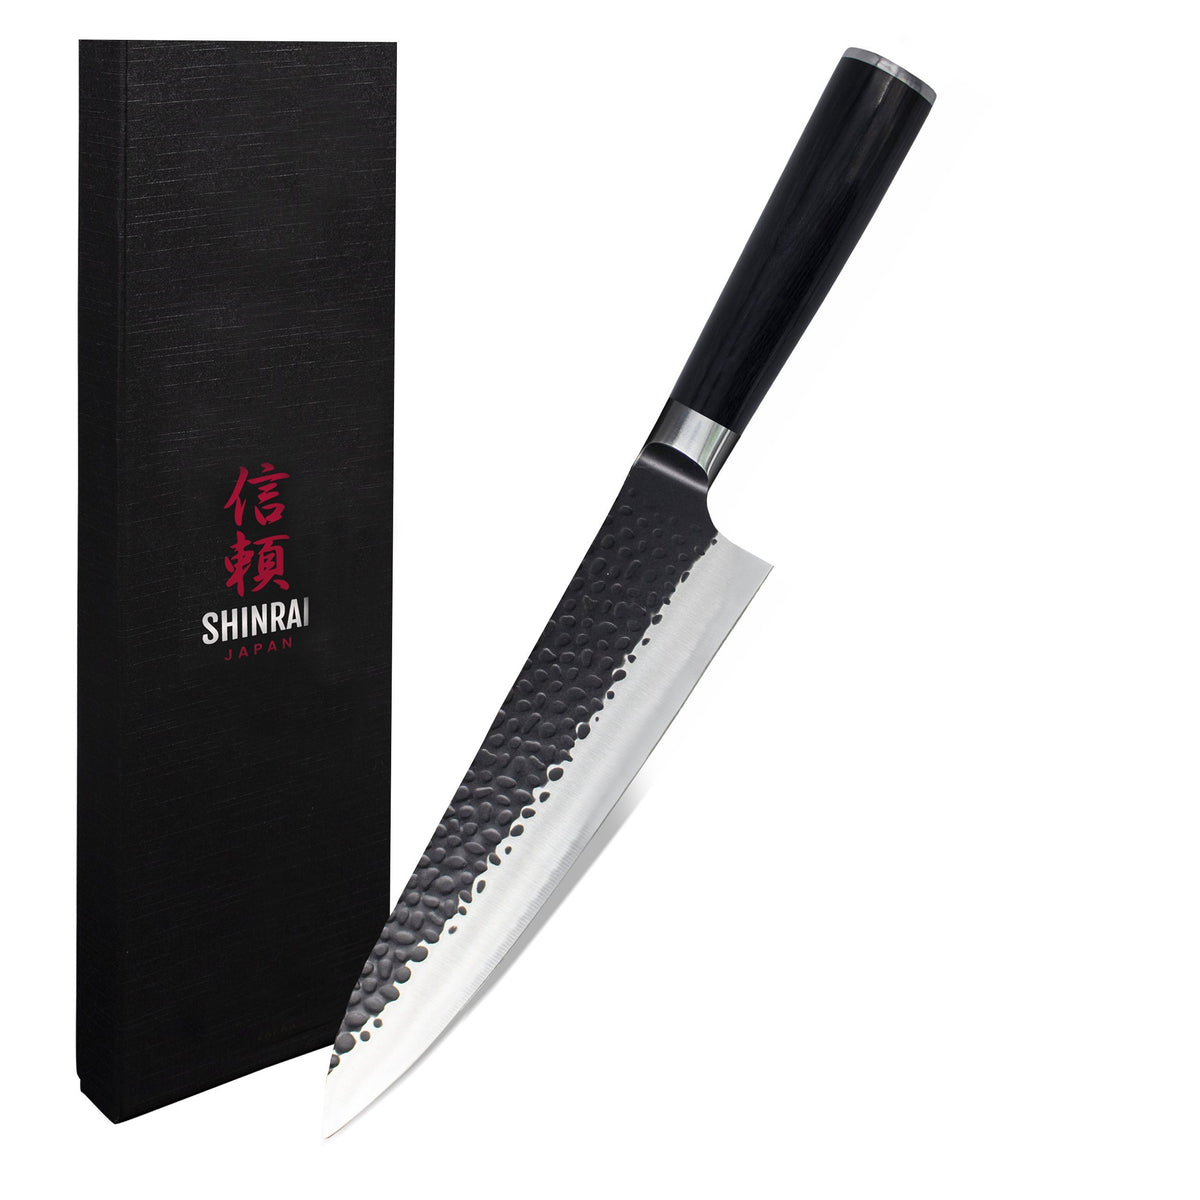 Chefs Knife: 20cm Portland Chefs Knife, Stainless Steel